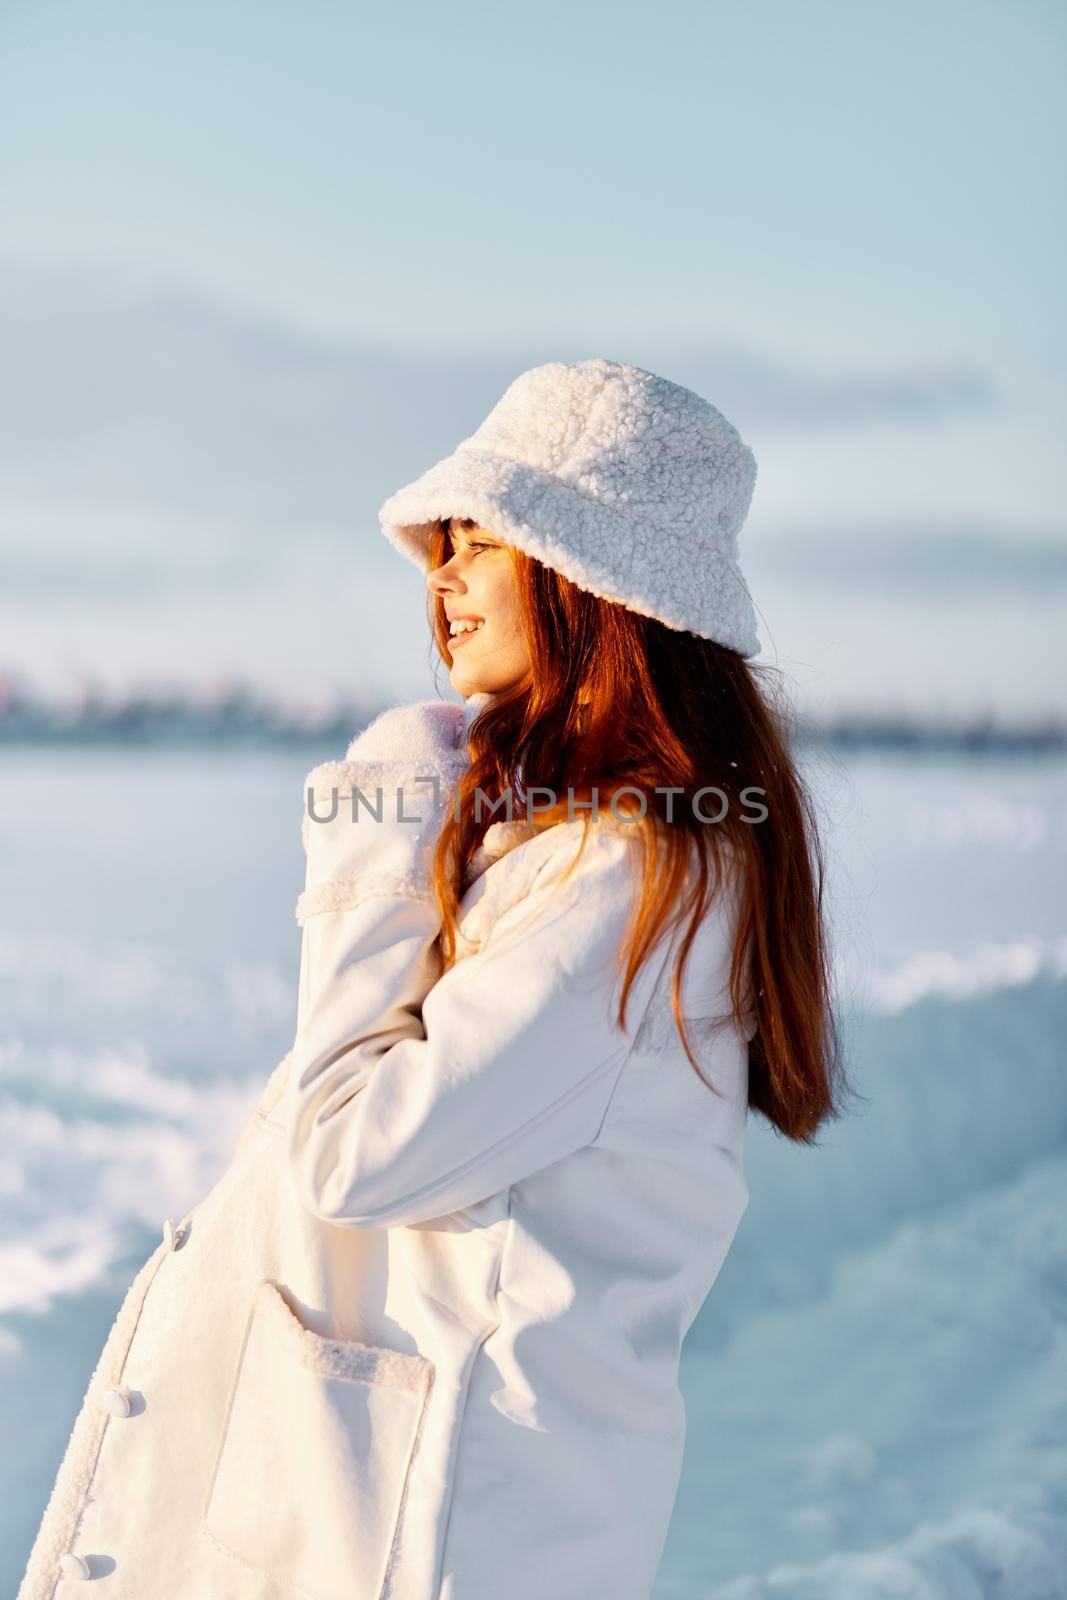 beautiful woman smile Winter mood walk white coat Lifestyle. High quality photo